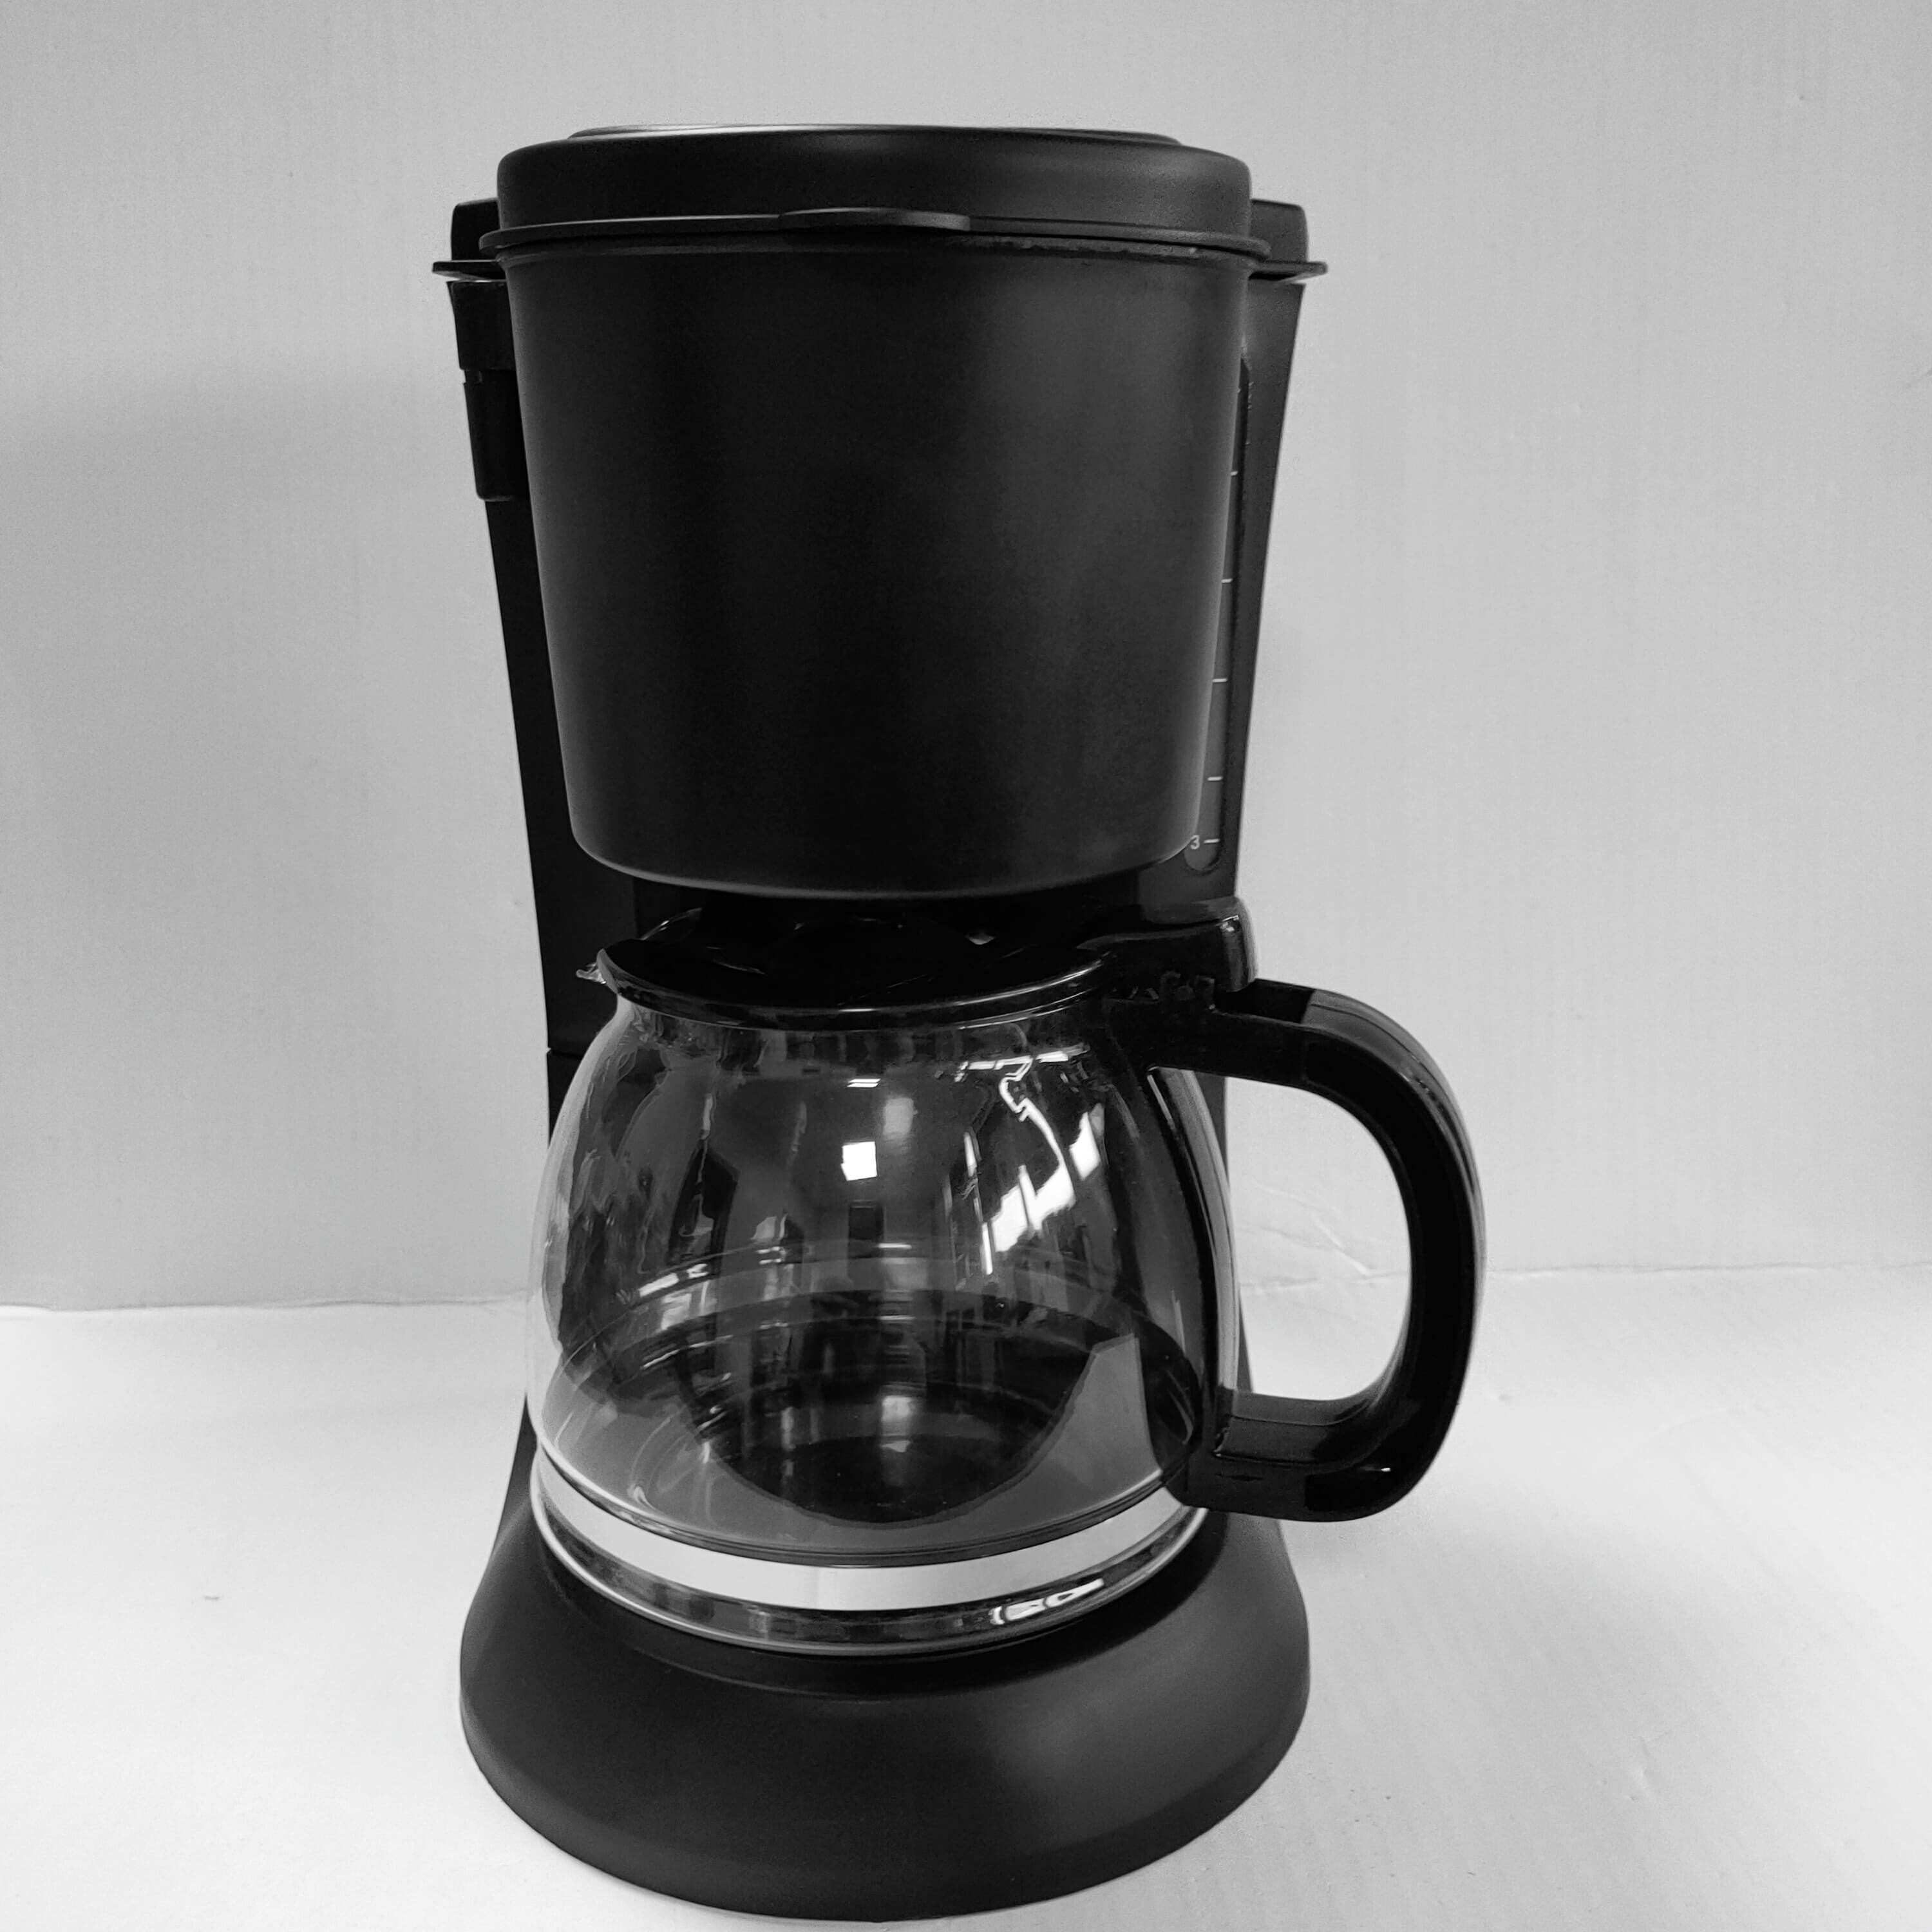 Cafetera con molinillo incorporado, cafetera de goteo programable de 12  tazas con cesta de filtro de acero inoxidable, color negro (negro)